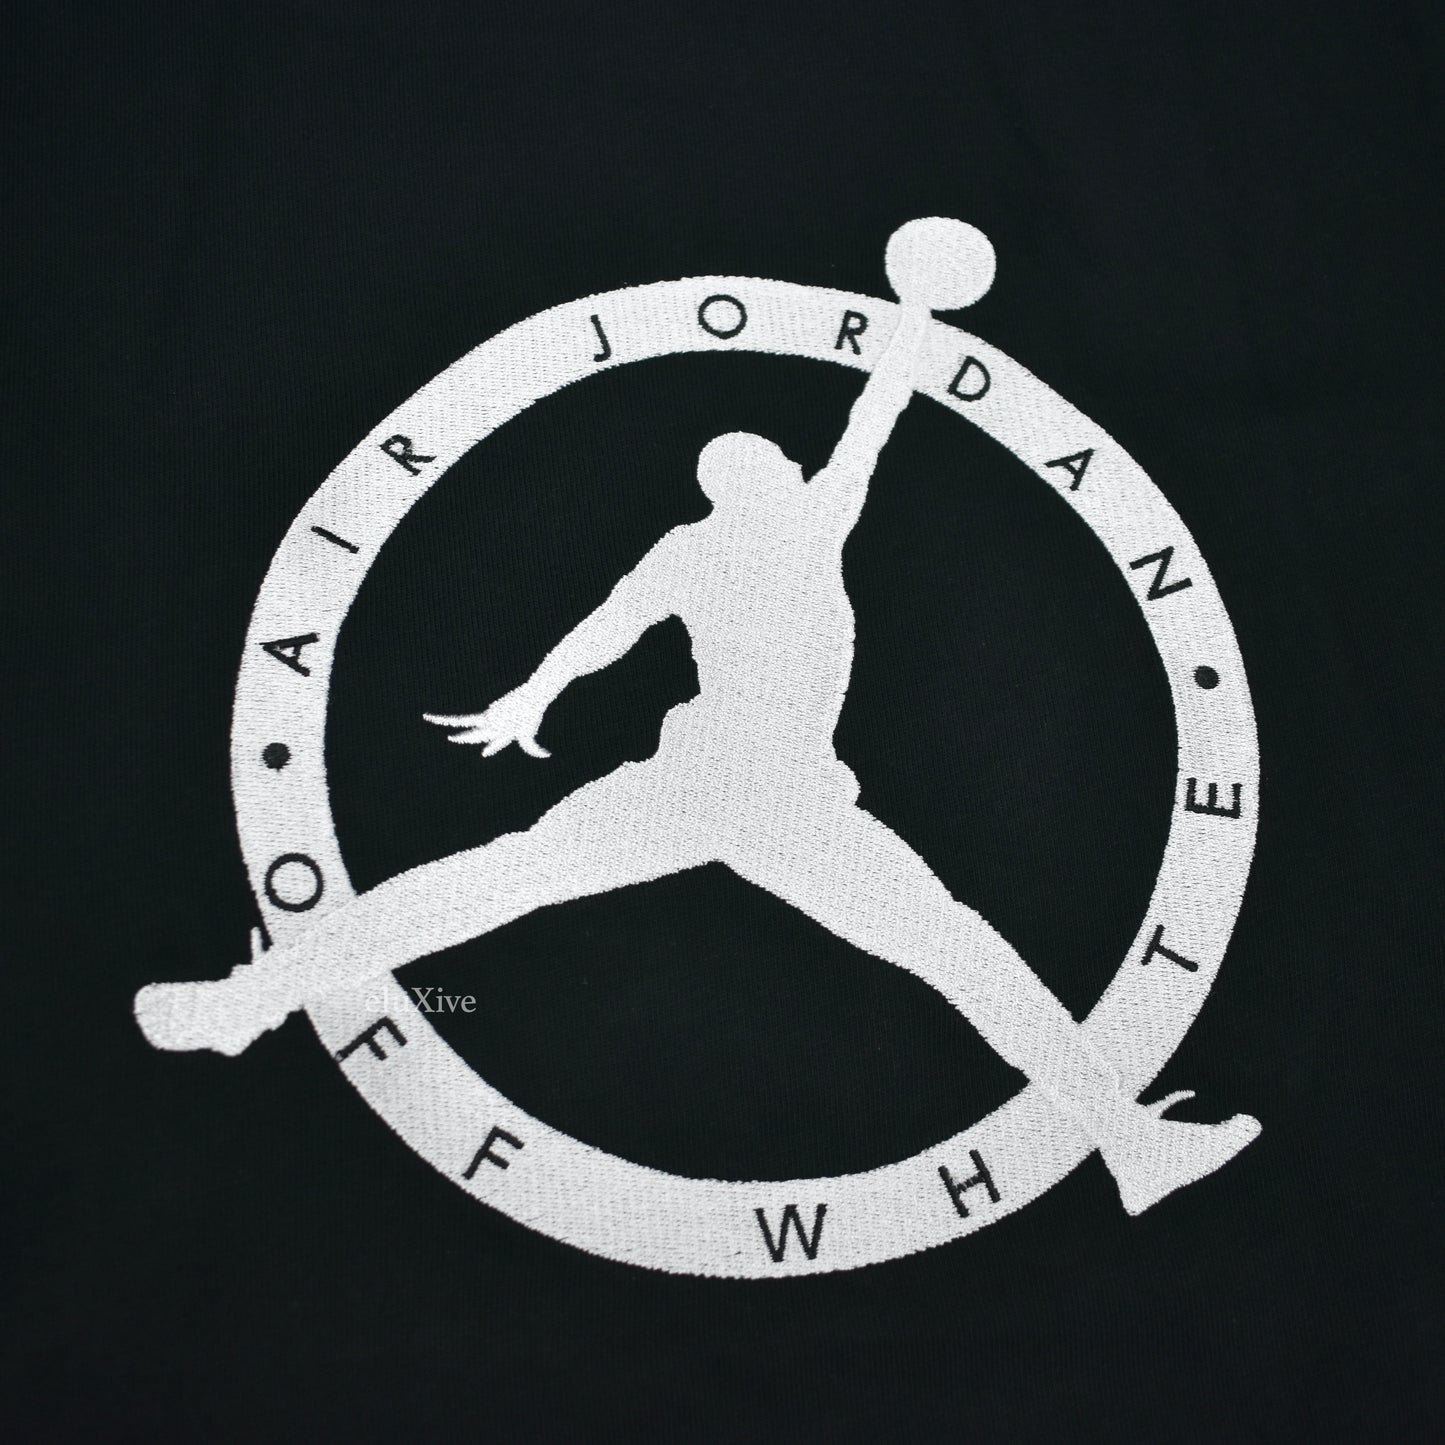 Nike x Off-White - Jordan 2 Logo Embroidered T-Shirt (Black)